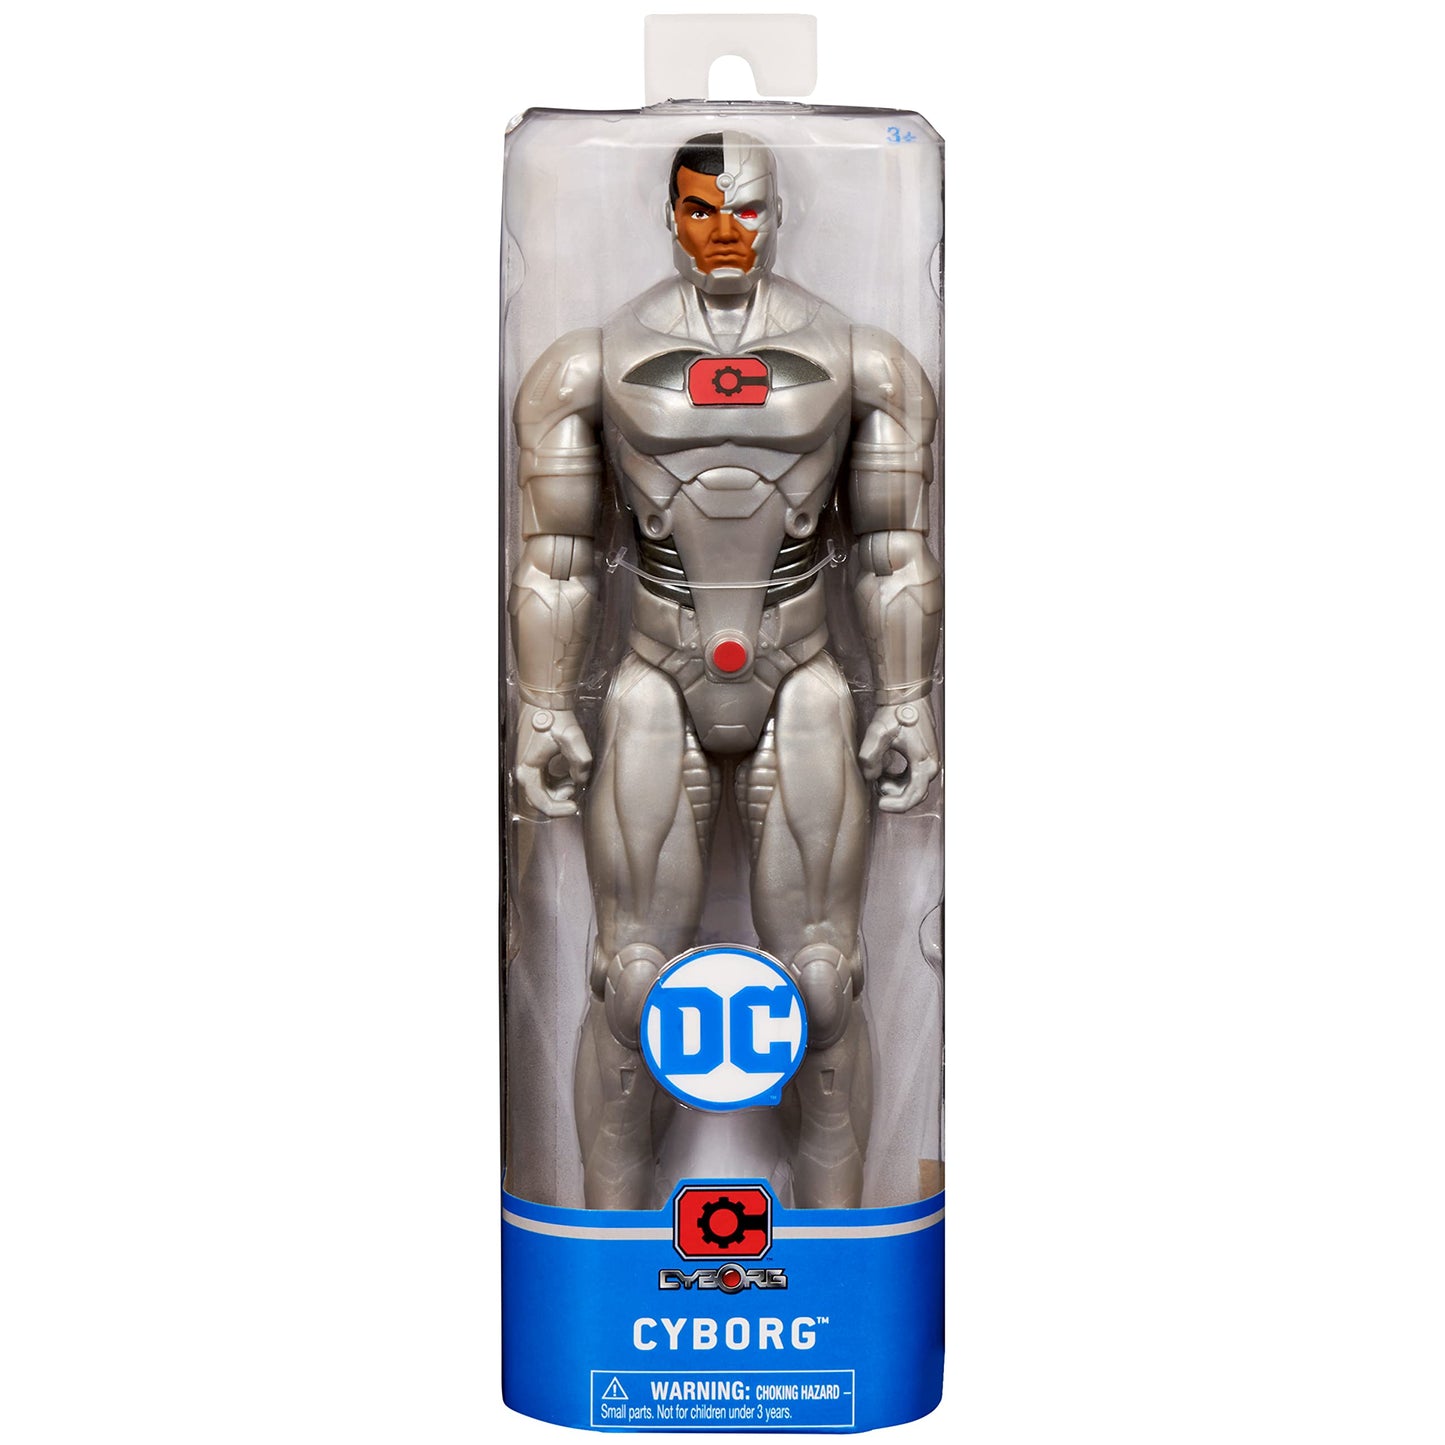 DC 12 inch Cyborg Figure